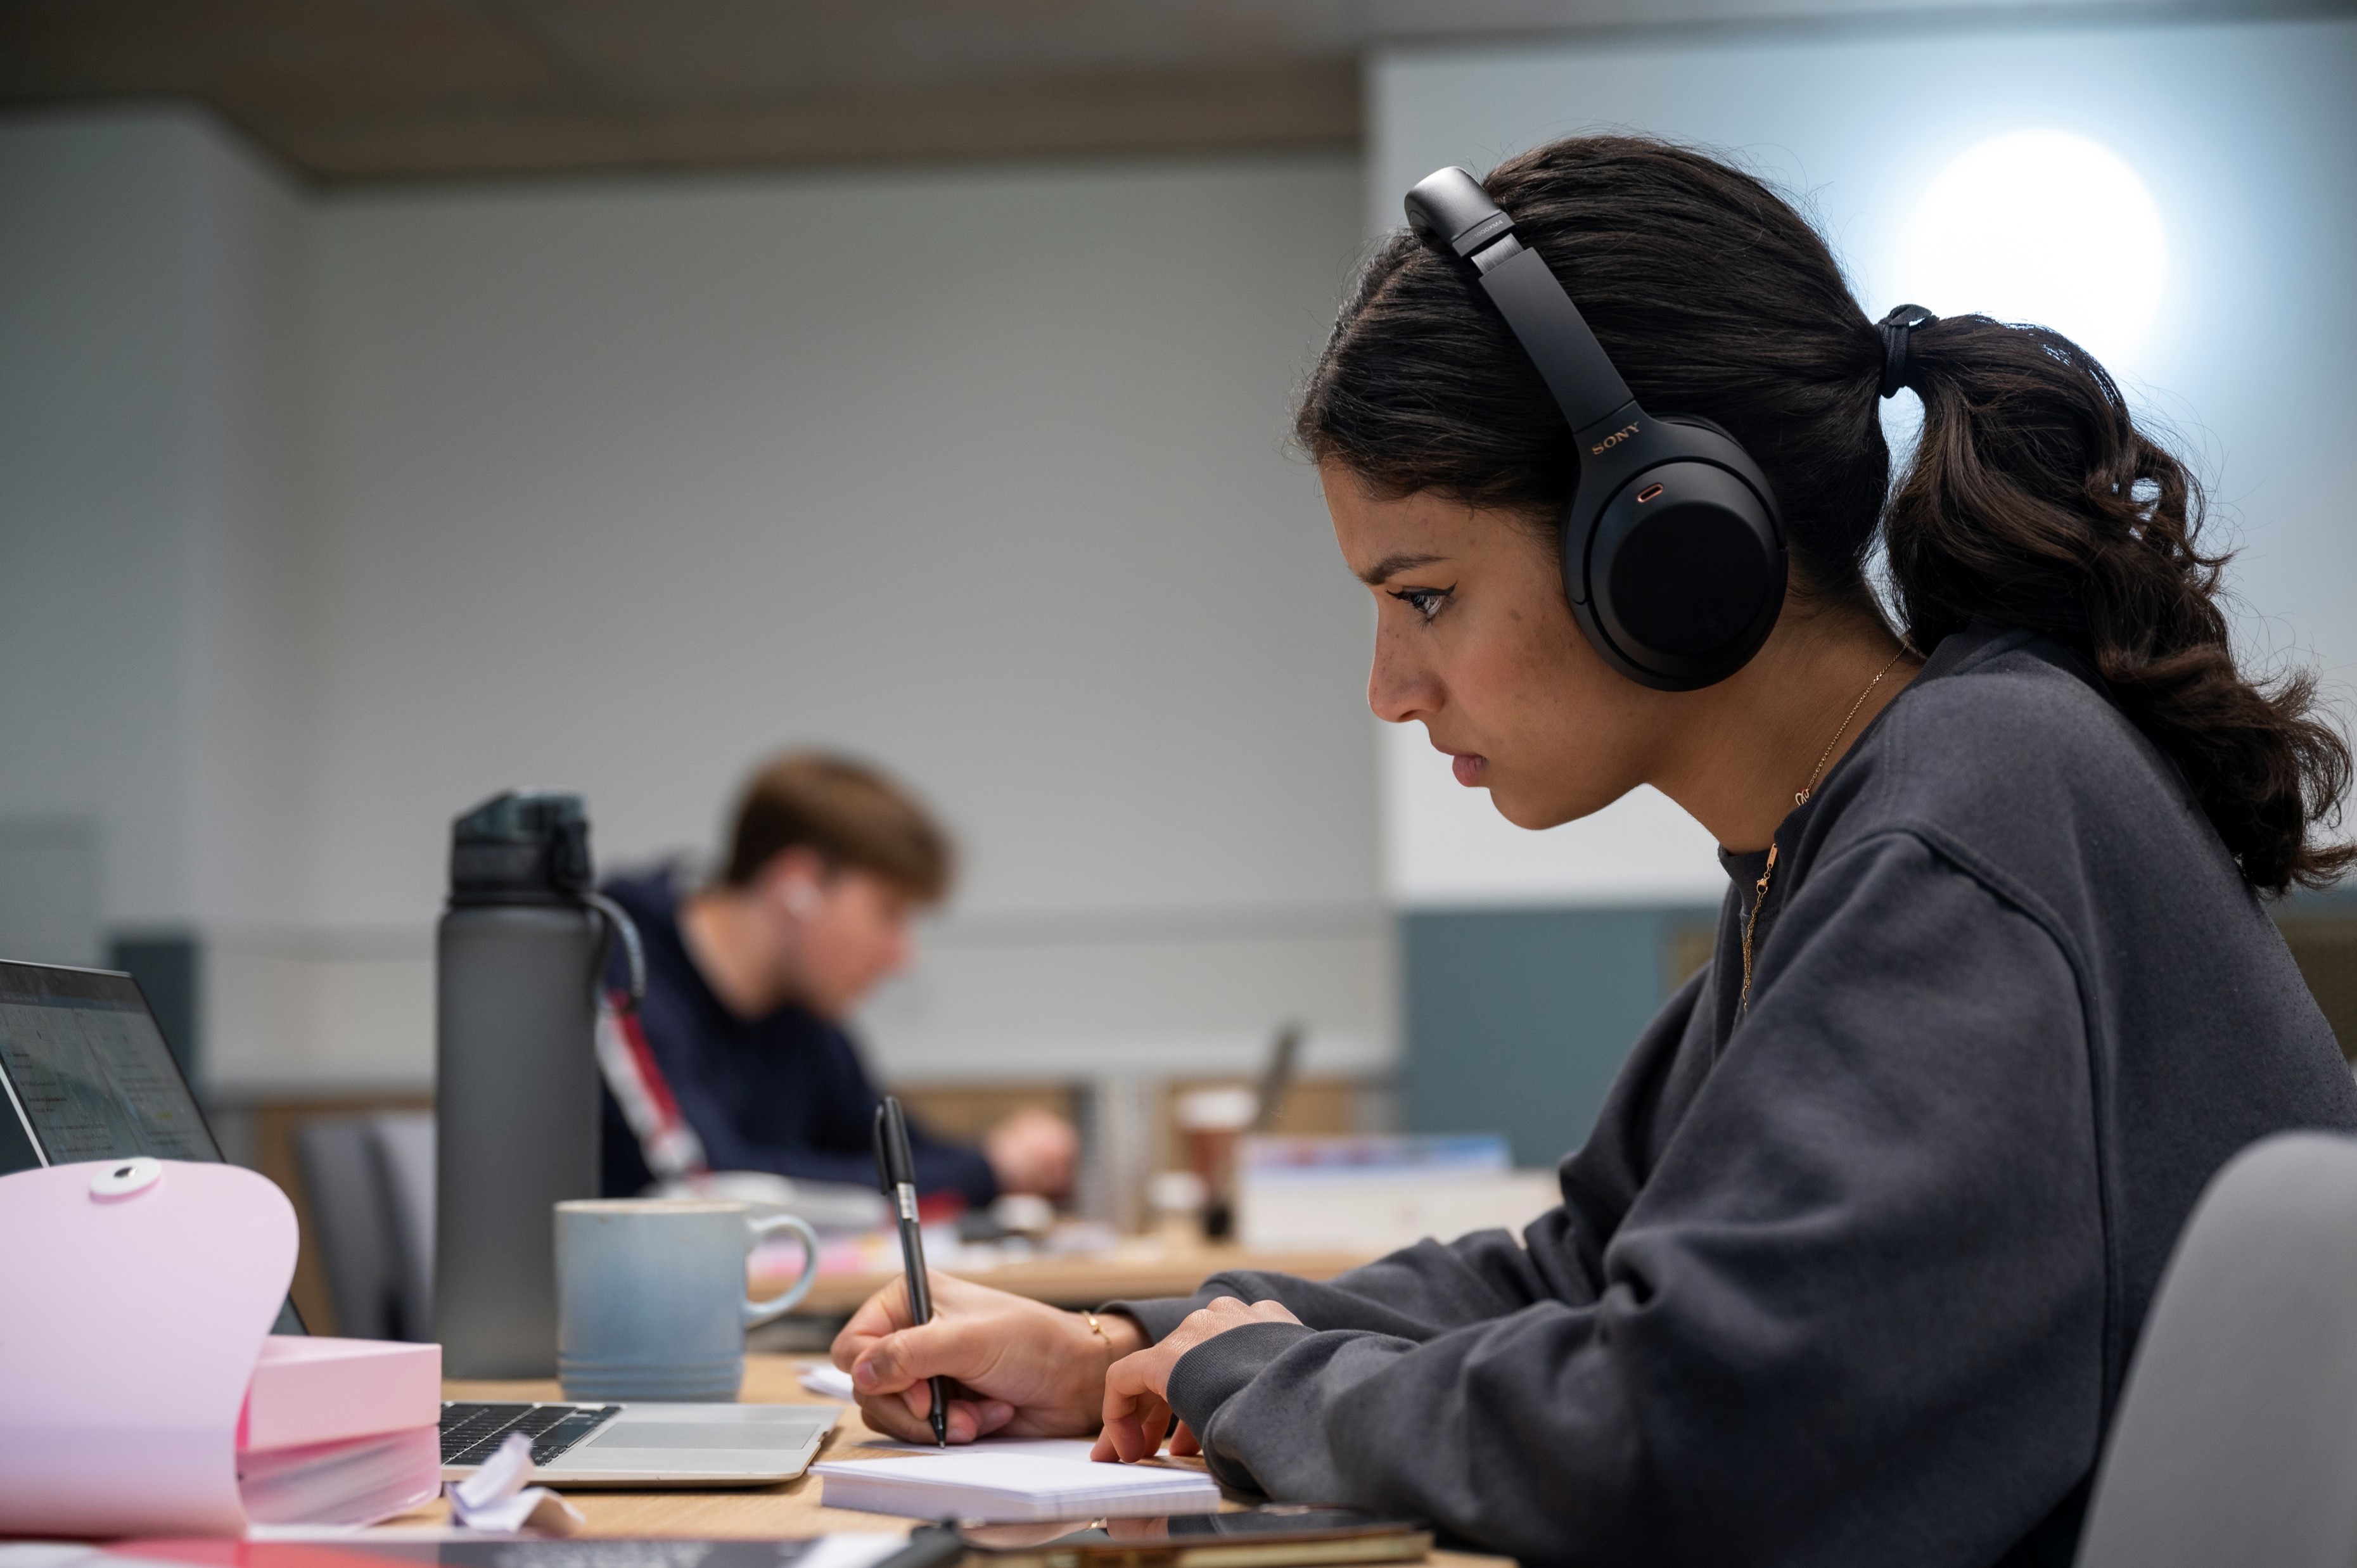 Student, wearing headphones, studies in the Gradel study space